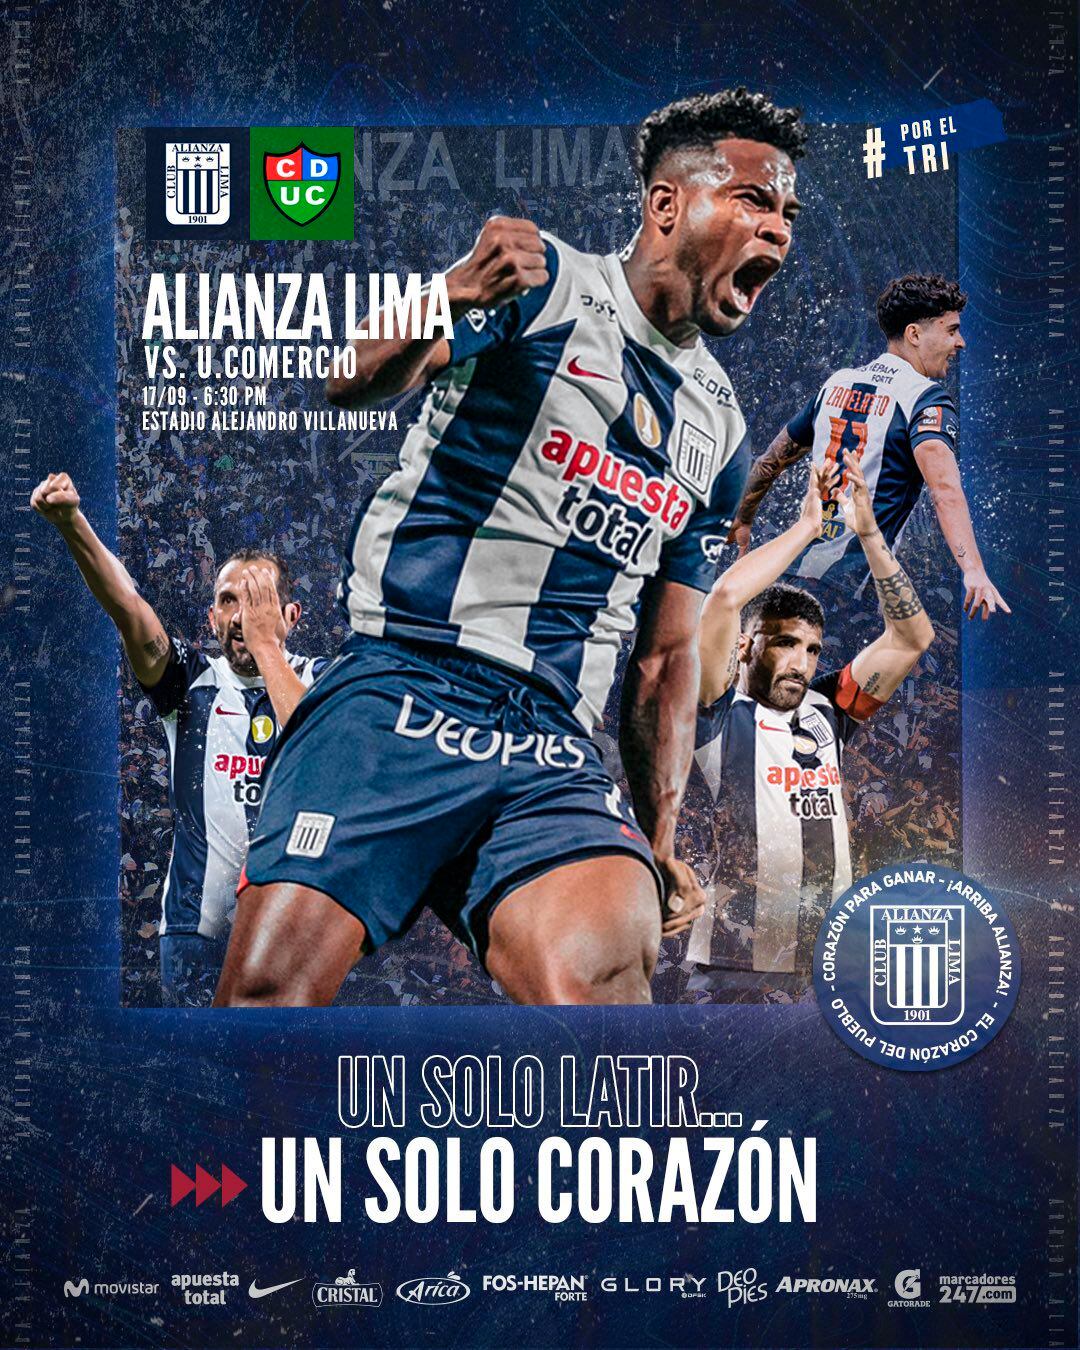 Alianza Lima announced their match against Union Comercio on the 13th of the Clausura match - Thanks: Alianza Lima.